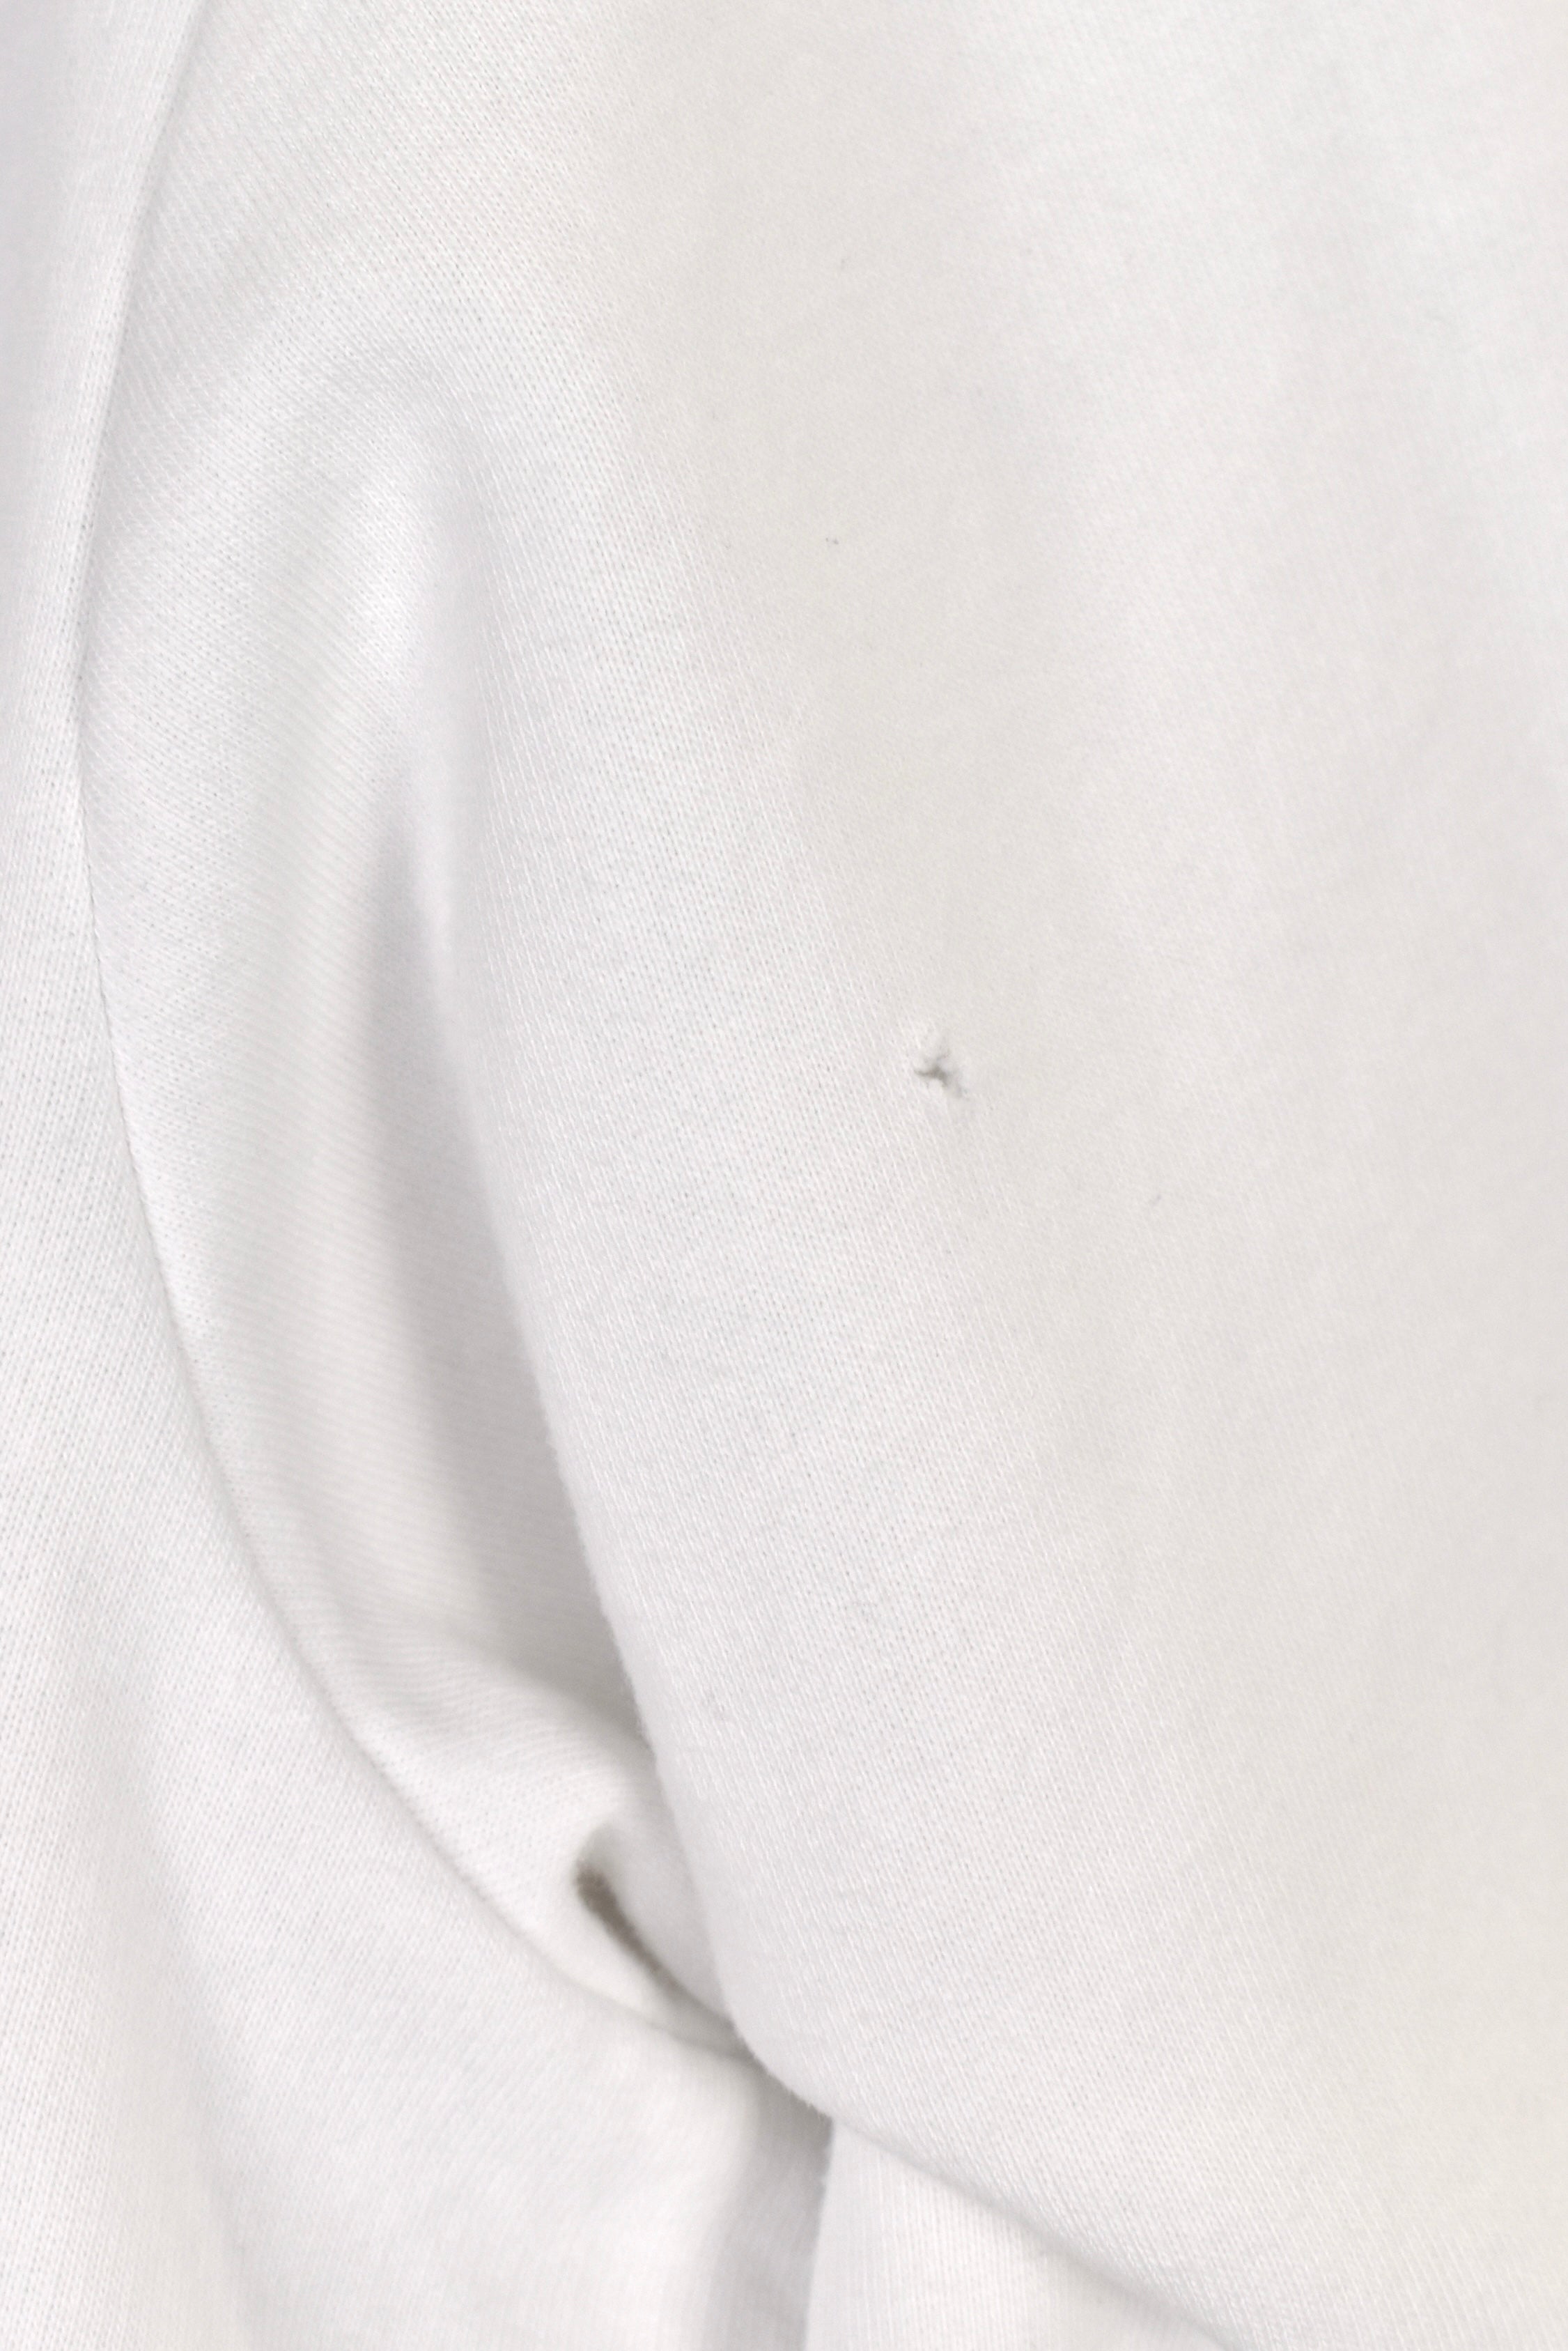 Modern Adidas sweatshirt (XL), white embroidered crewneck